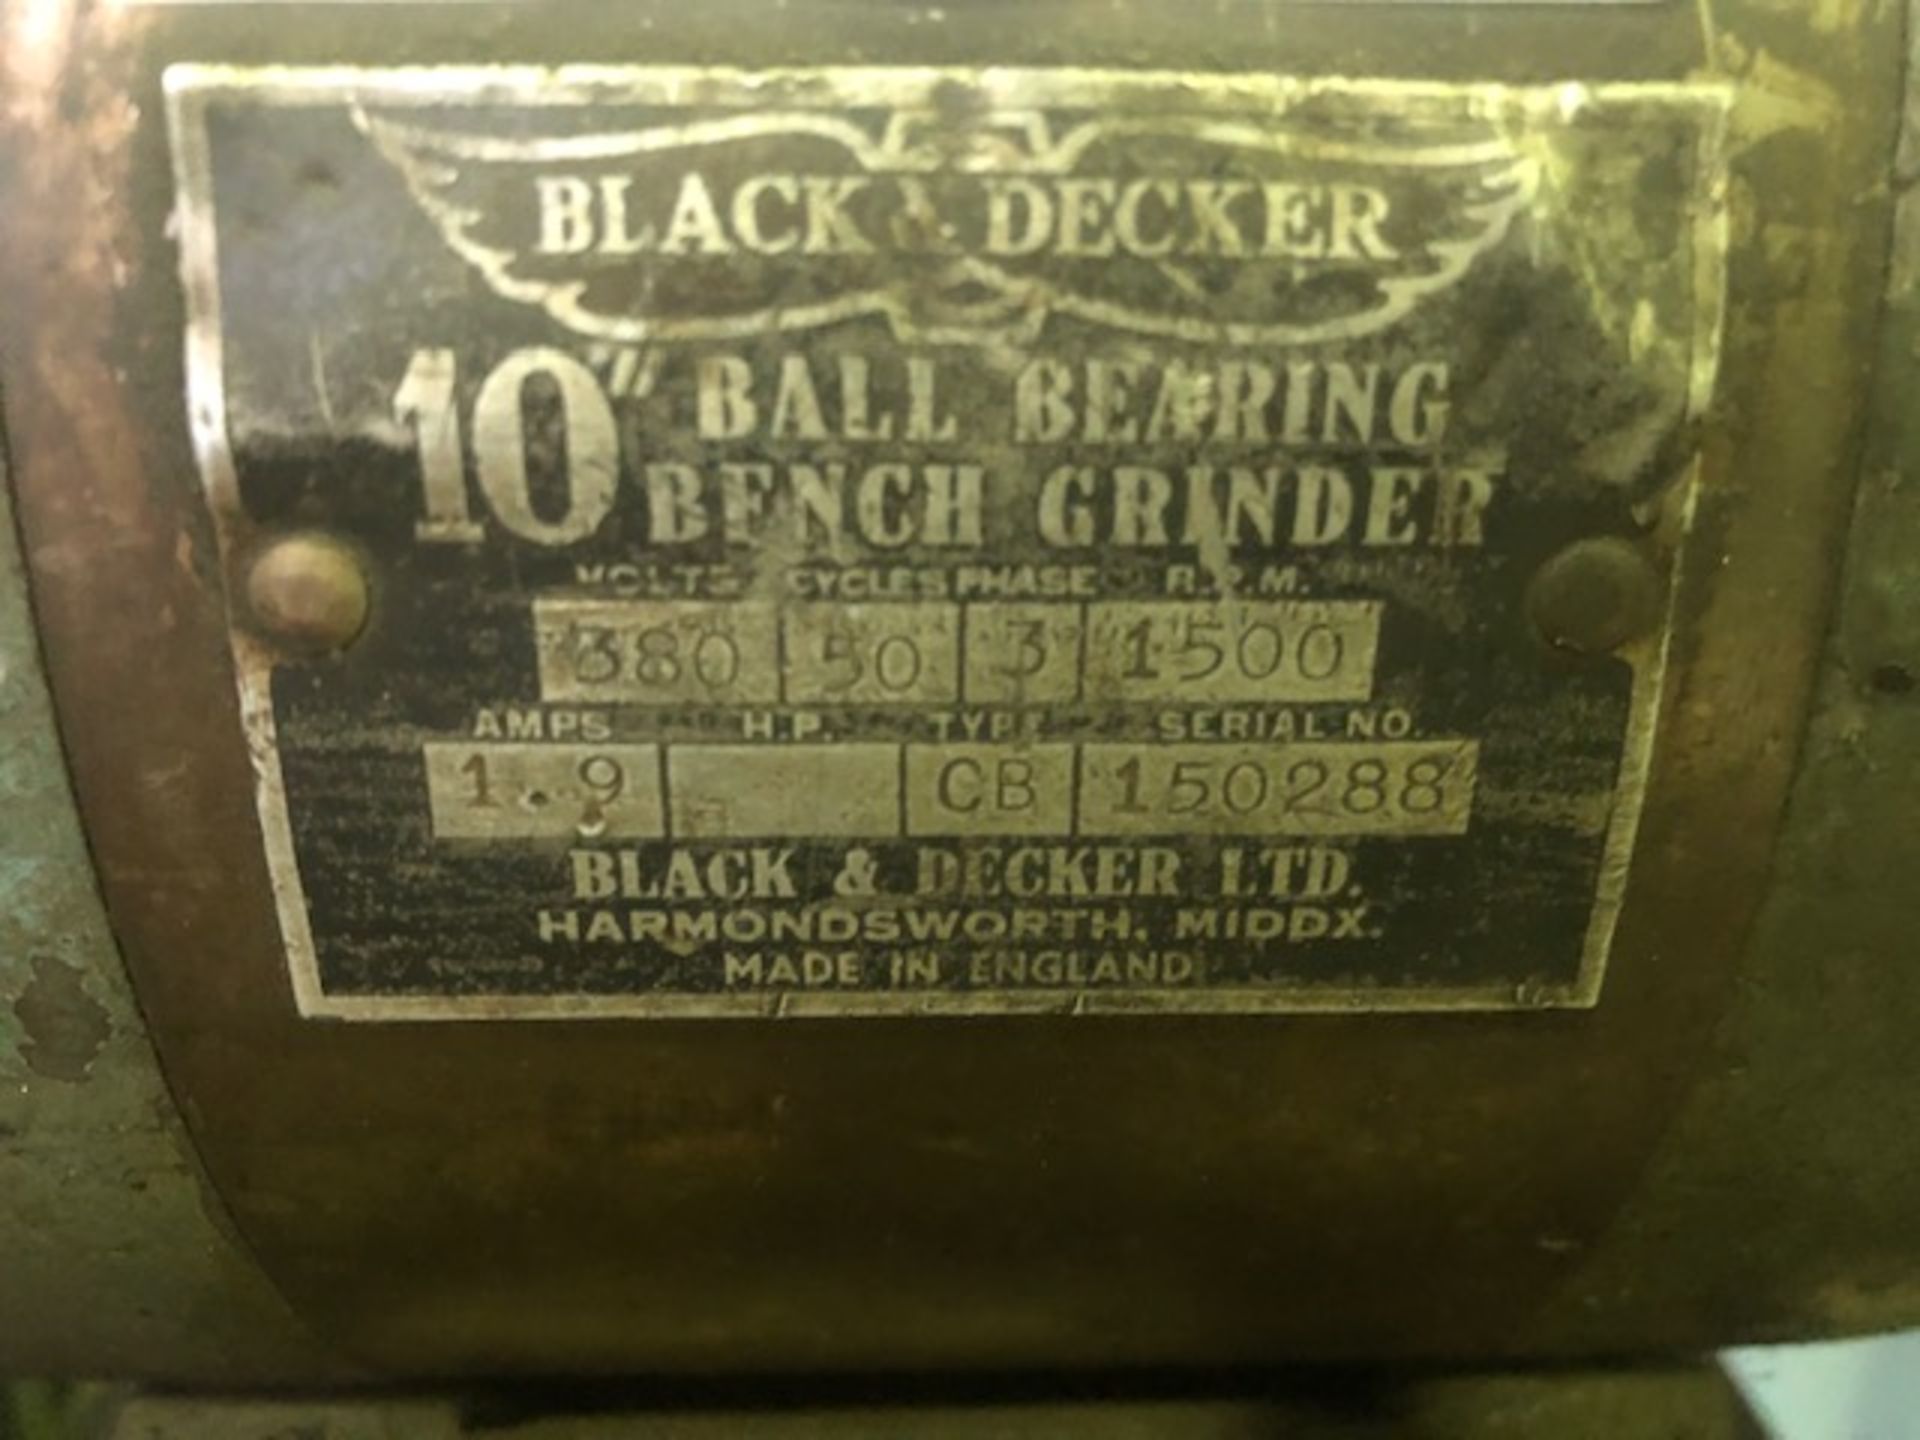 Black & Decker 10' ball bearing bench grinder - Image 3 of 5